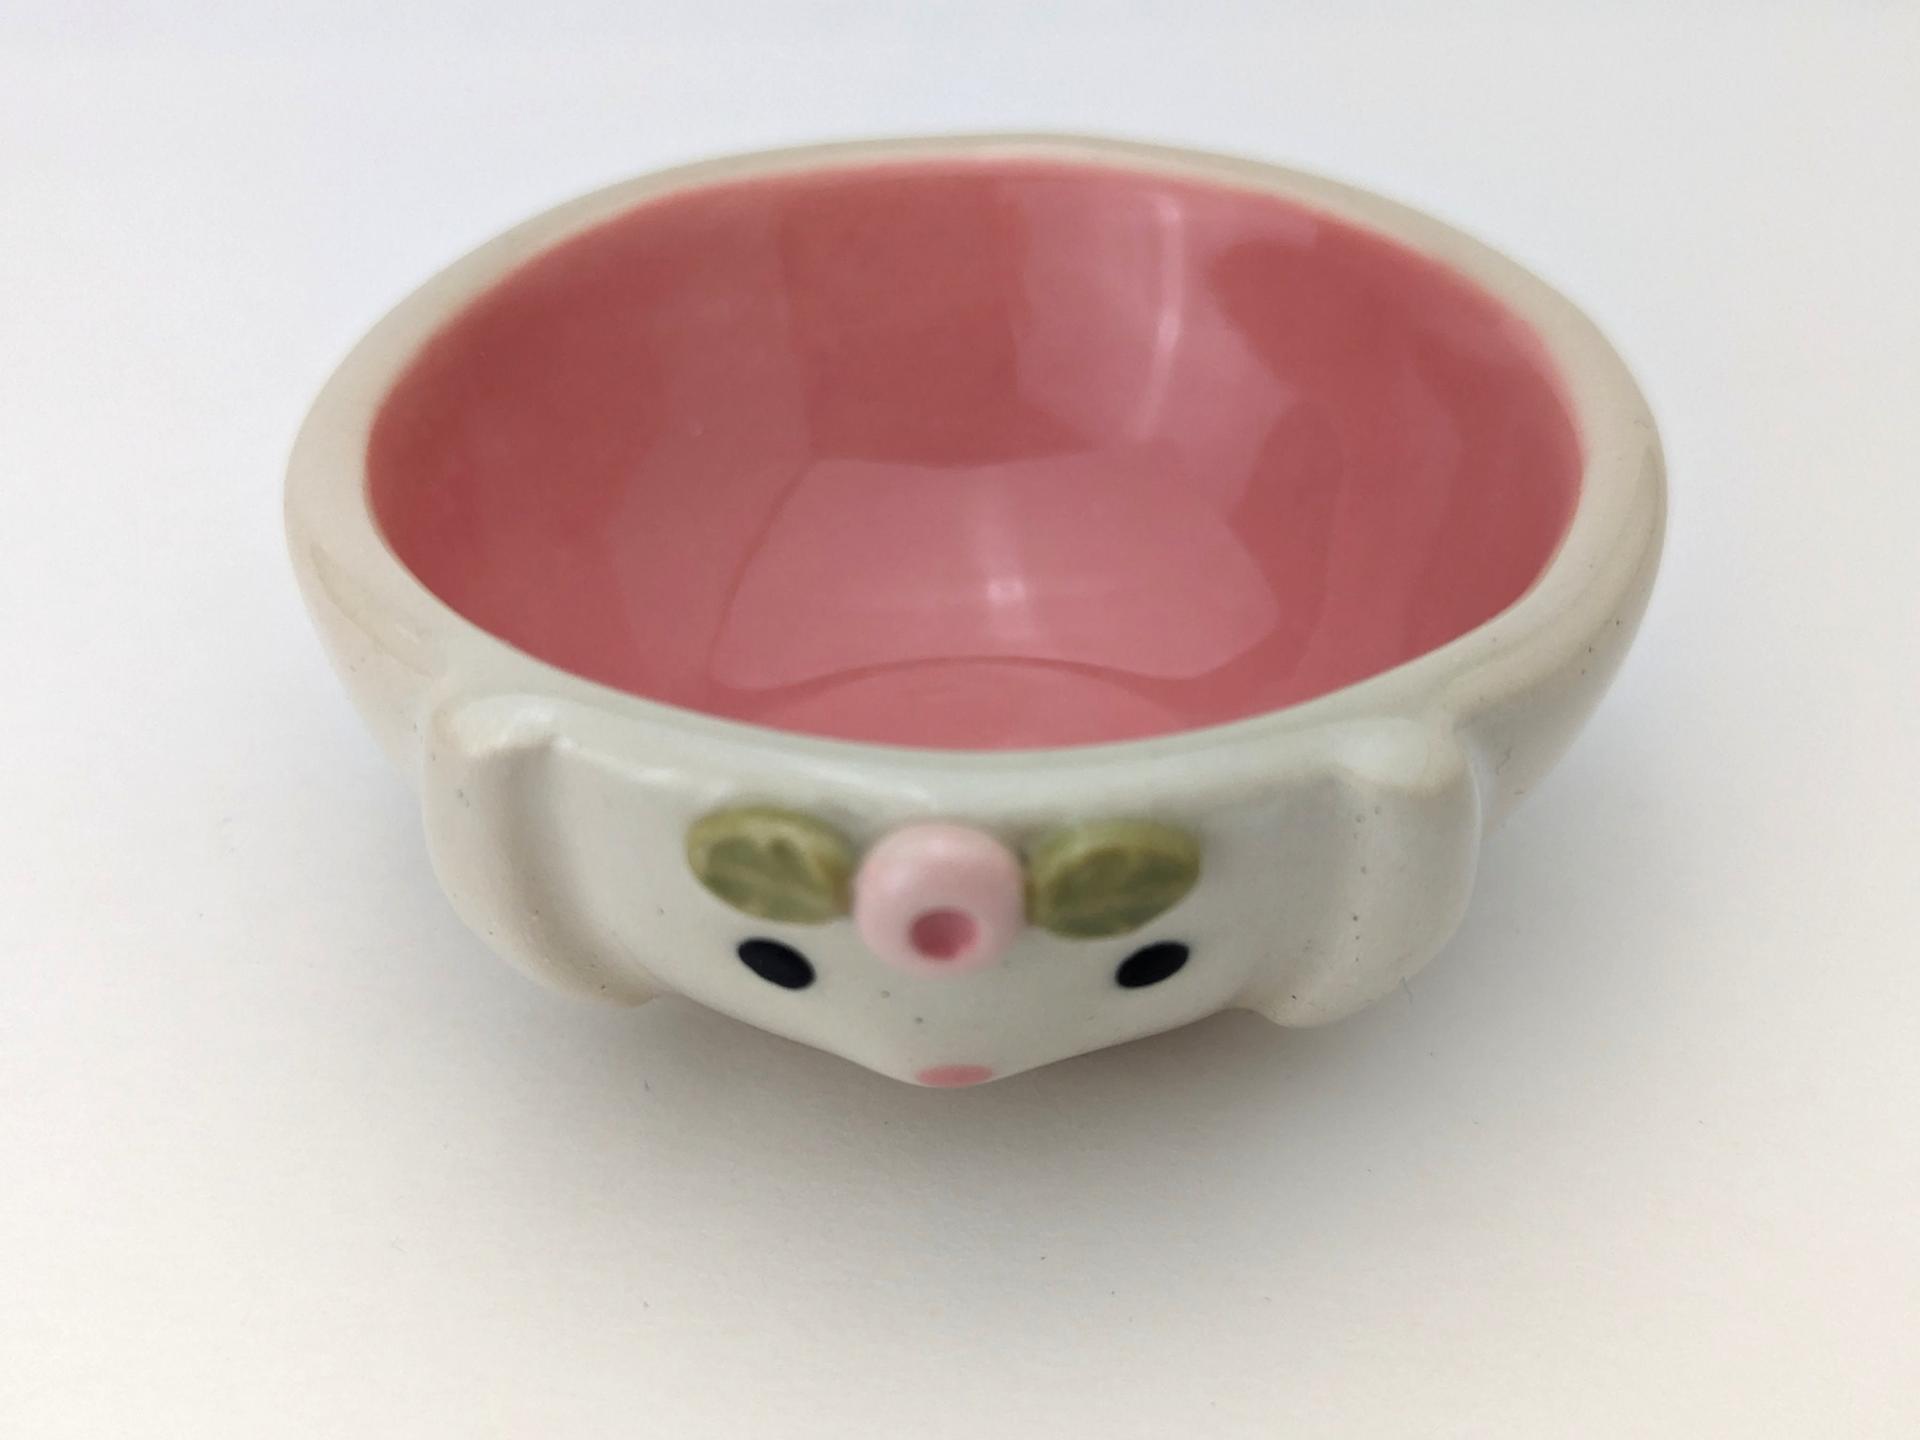 Small handmade bunny bowl. Cute rabbit dish. Candy bowl, snack bowl, trinket bowl, tiny planter. Small-batch ceramics. Hand-painted pottery.